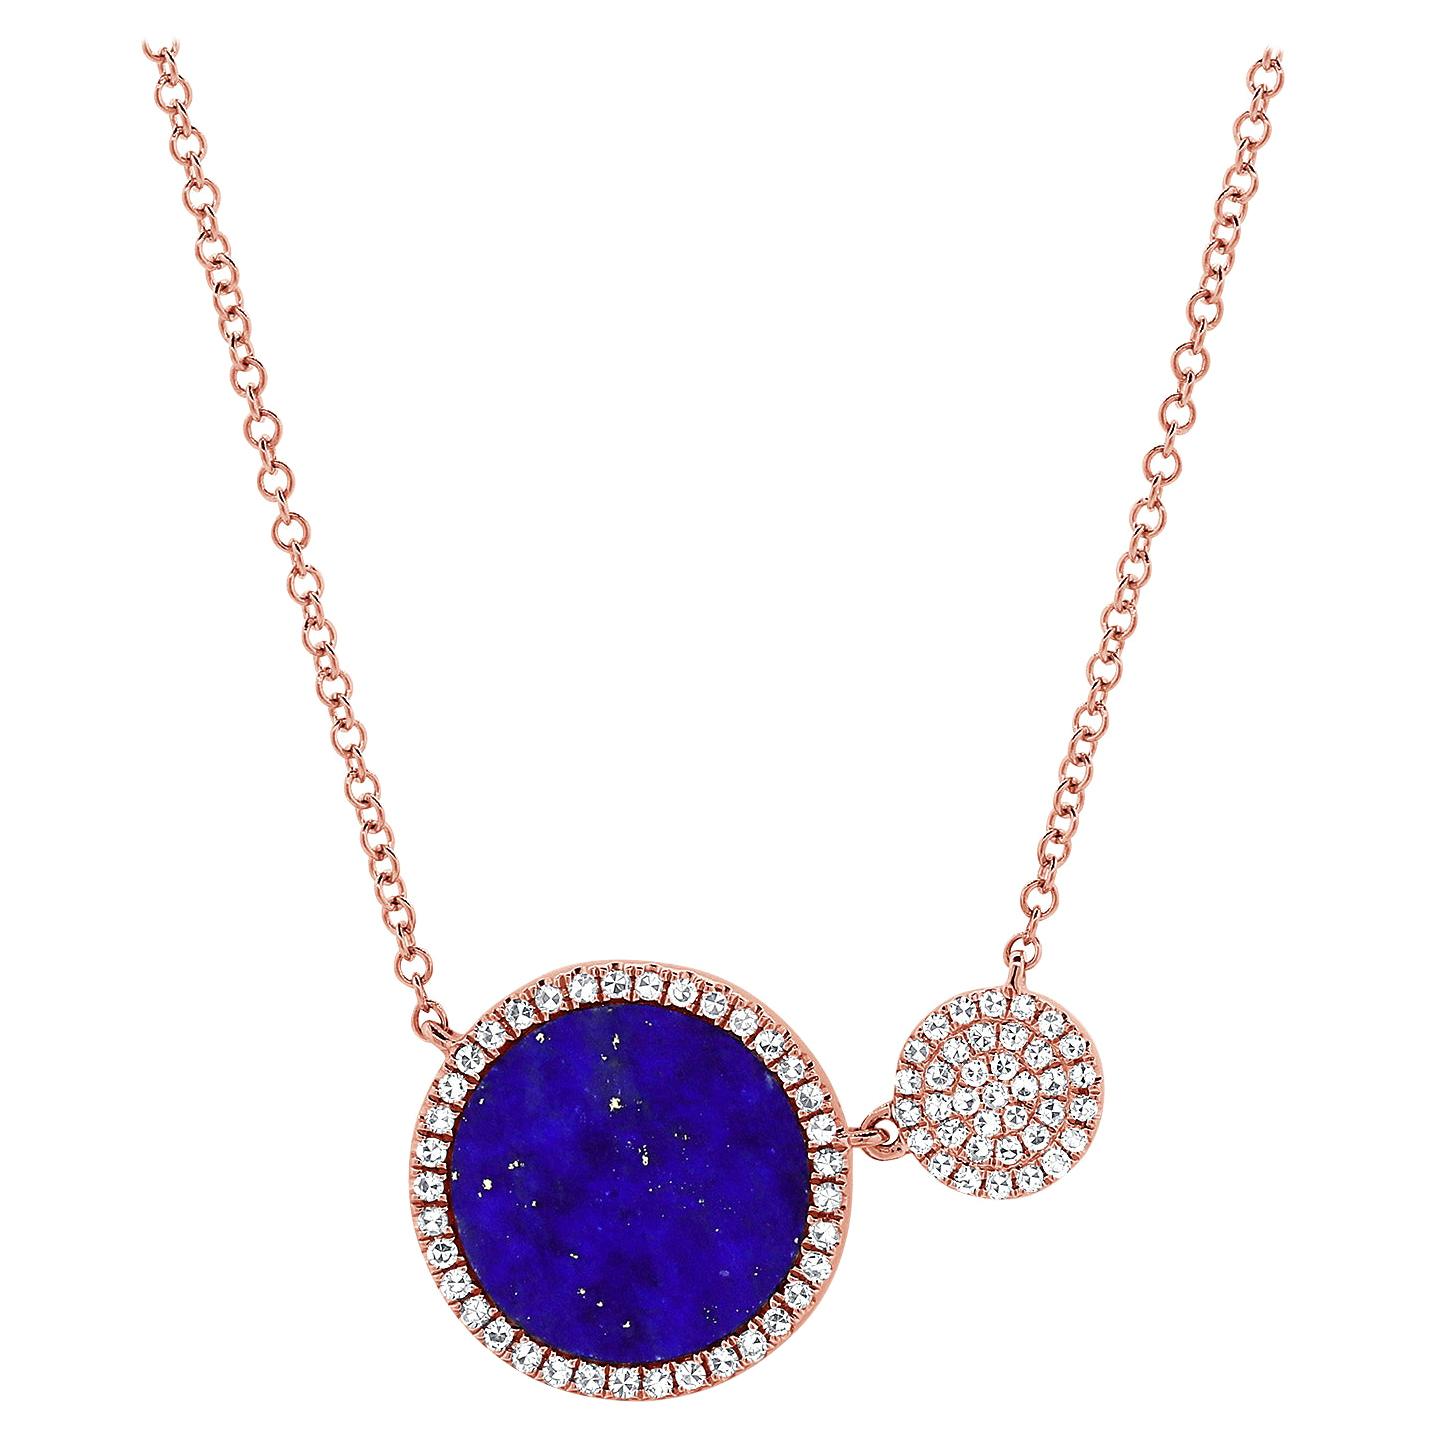 14 Karat Rose Gold 0.22 Carat Diamond & Lapis Pendant Necklace